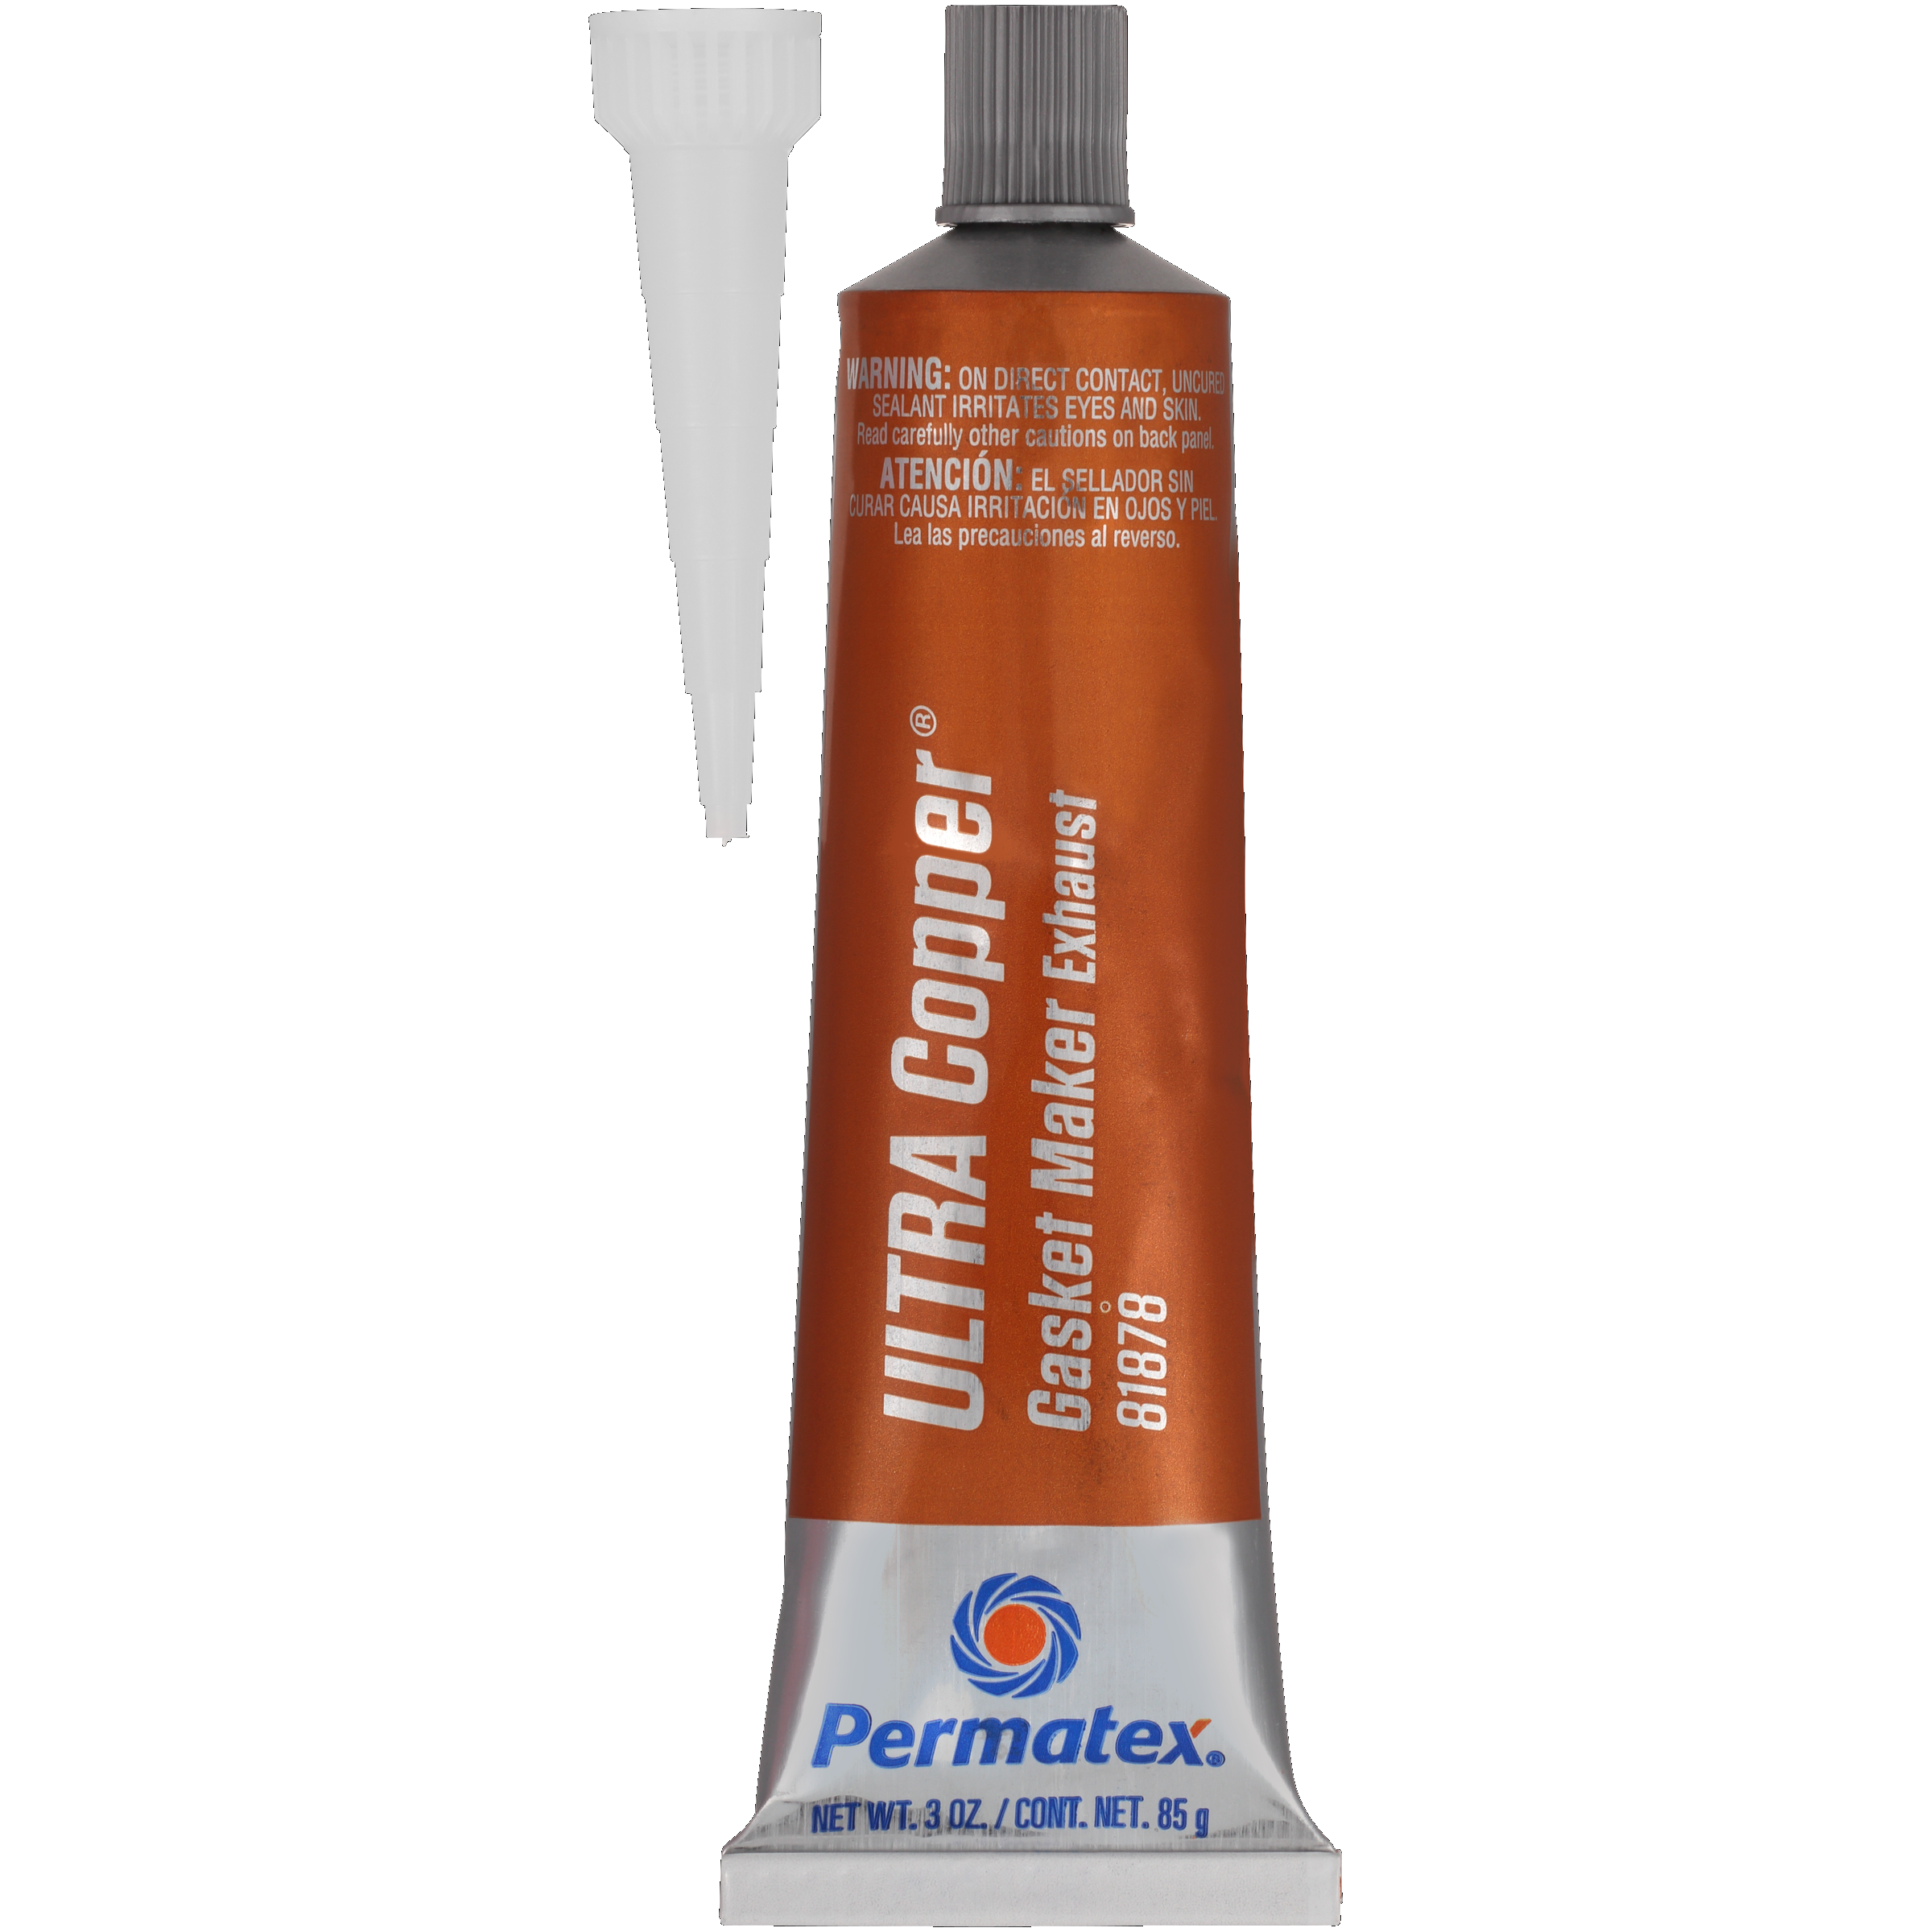 Permatex Ultra Copper Maximum Temperature RTV Silicone Gasket Maker (3 oz)  - Permatex 81878